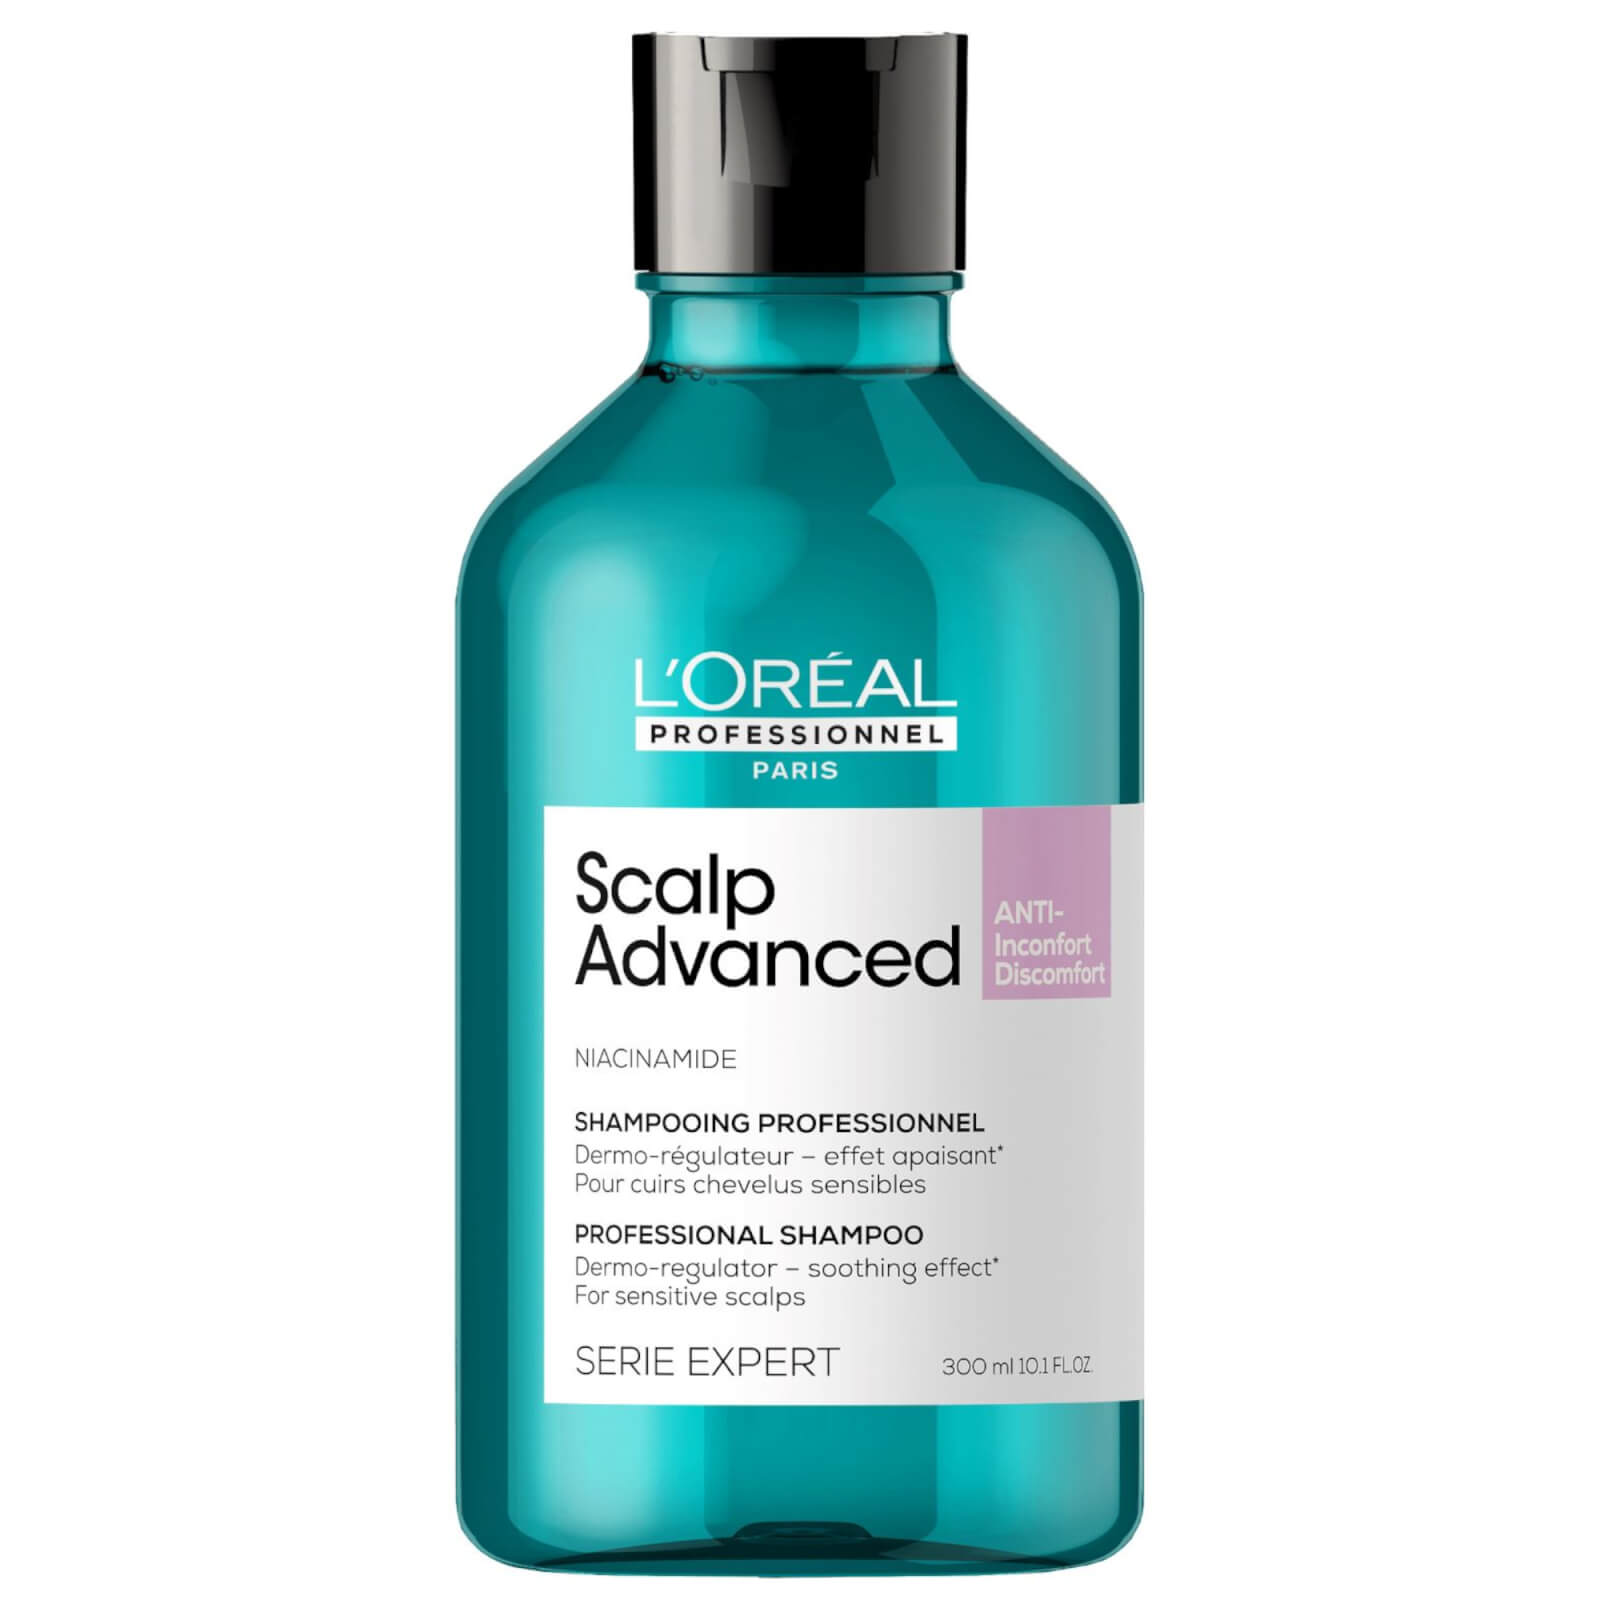 L'oreal Professionnel Serié Expert Scalp Advanced Anti-discomfort Dermo-regulator Shampoo 300ml